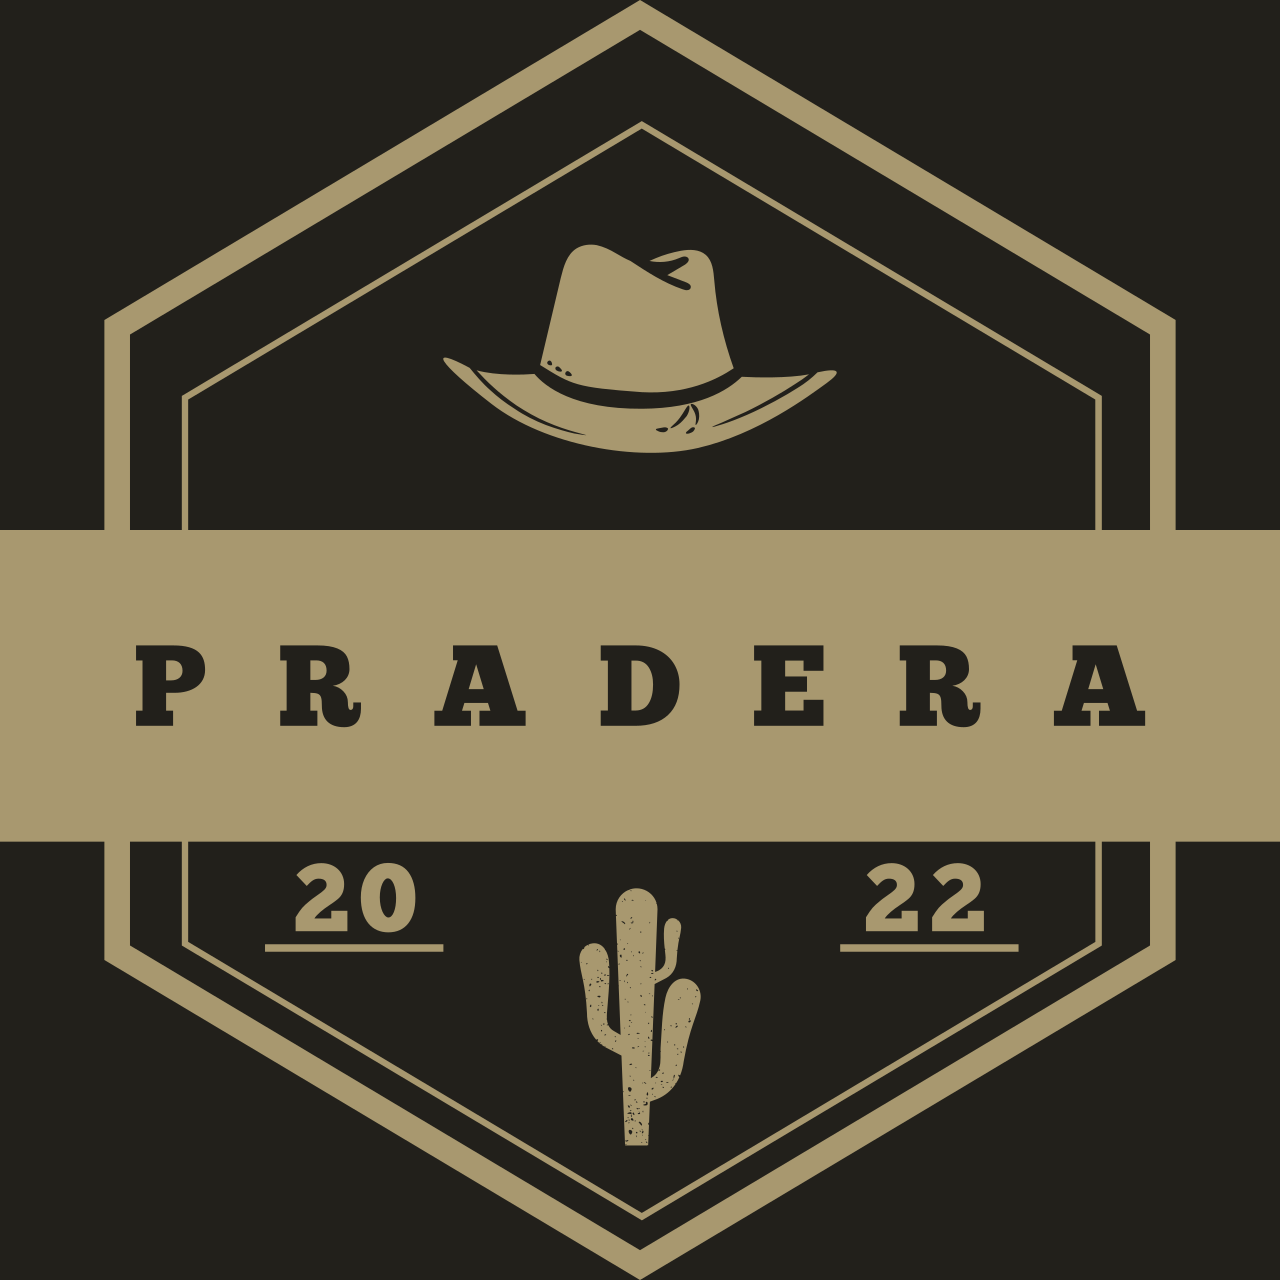 Pradera's logo